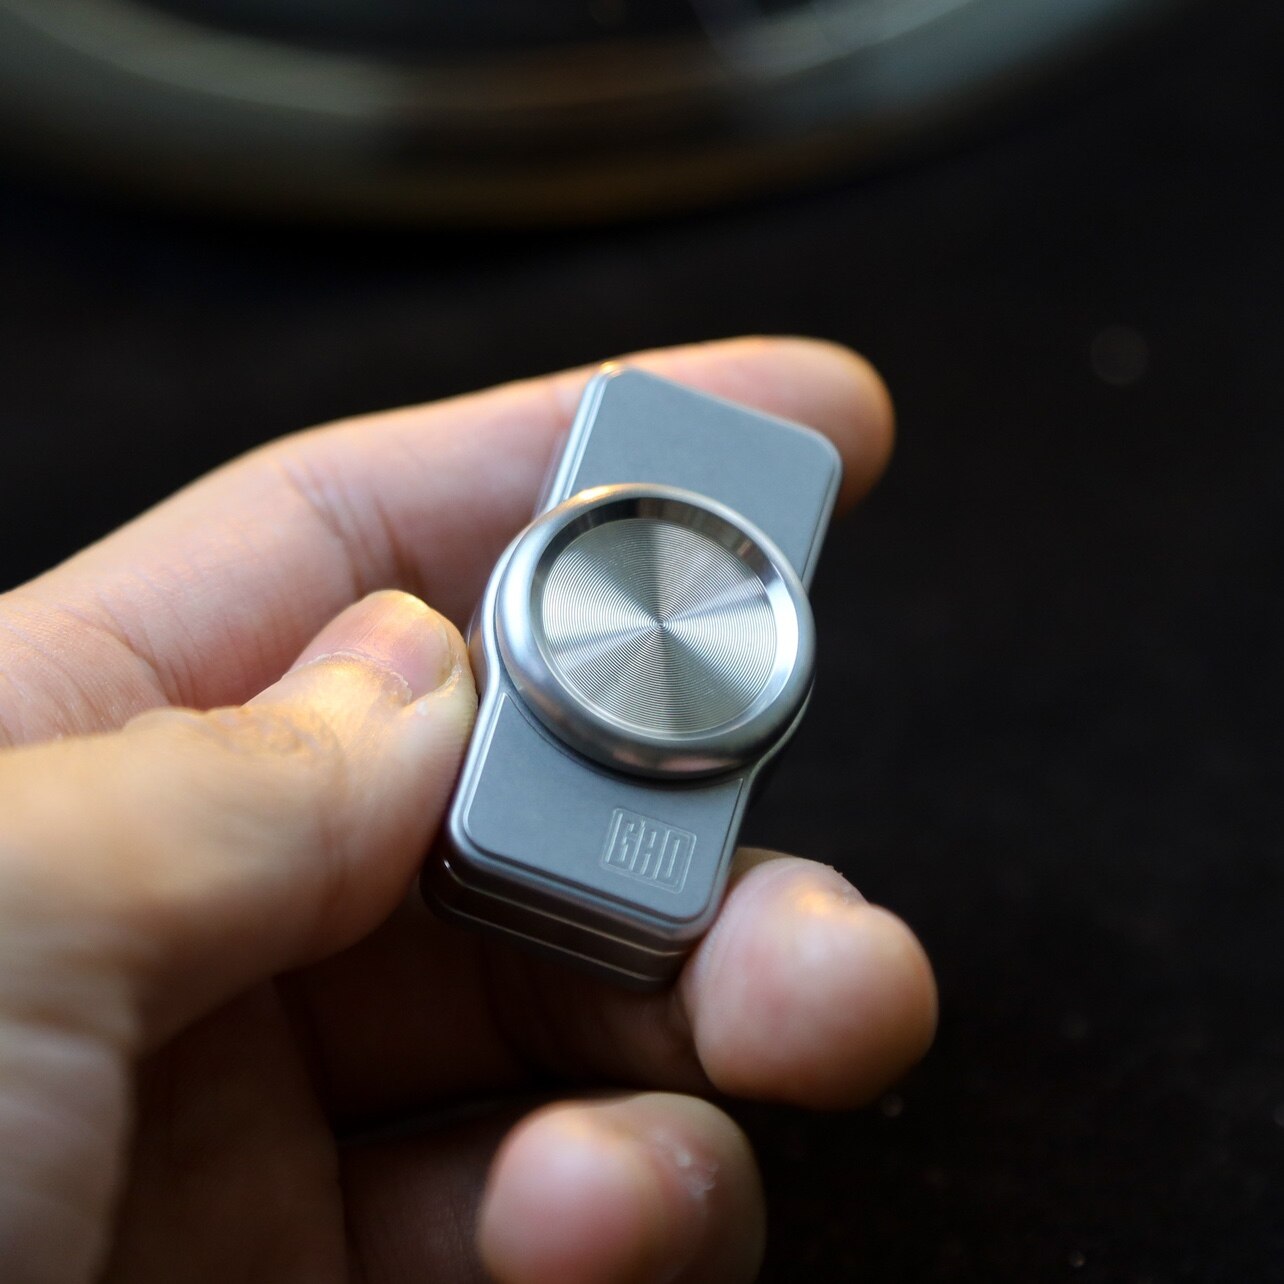 GAO Studio Milk Slider Fingertip Gyro Metal Magnetic Adult Decompression EDC-metalfidget